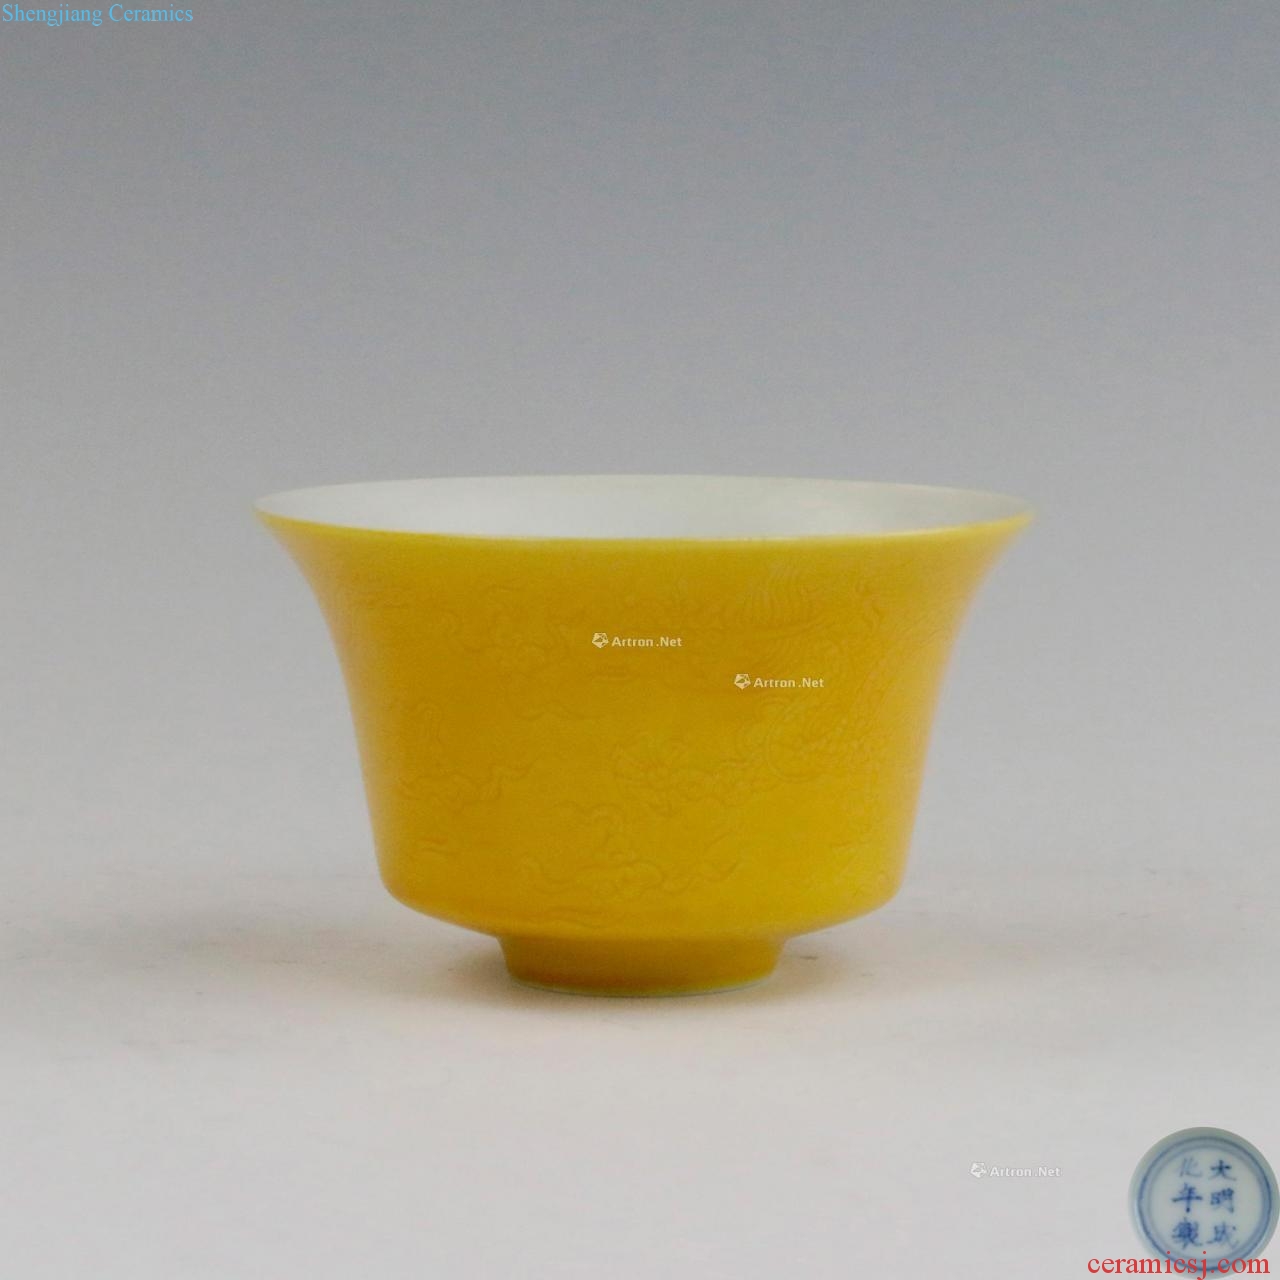 Bright yellow glaze, dark carved dragon cup